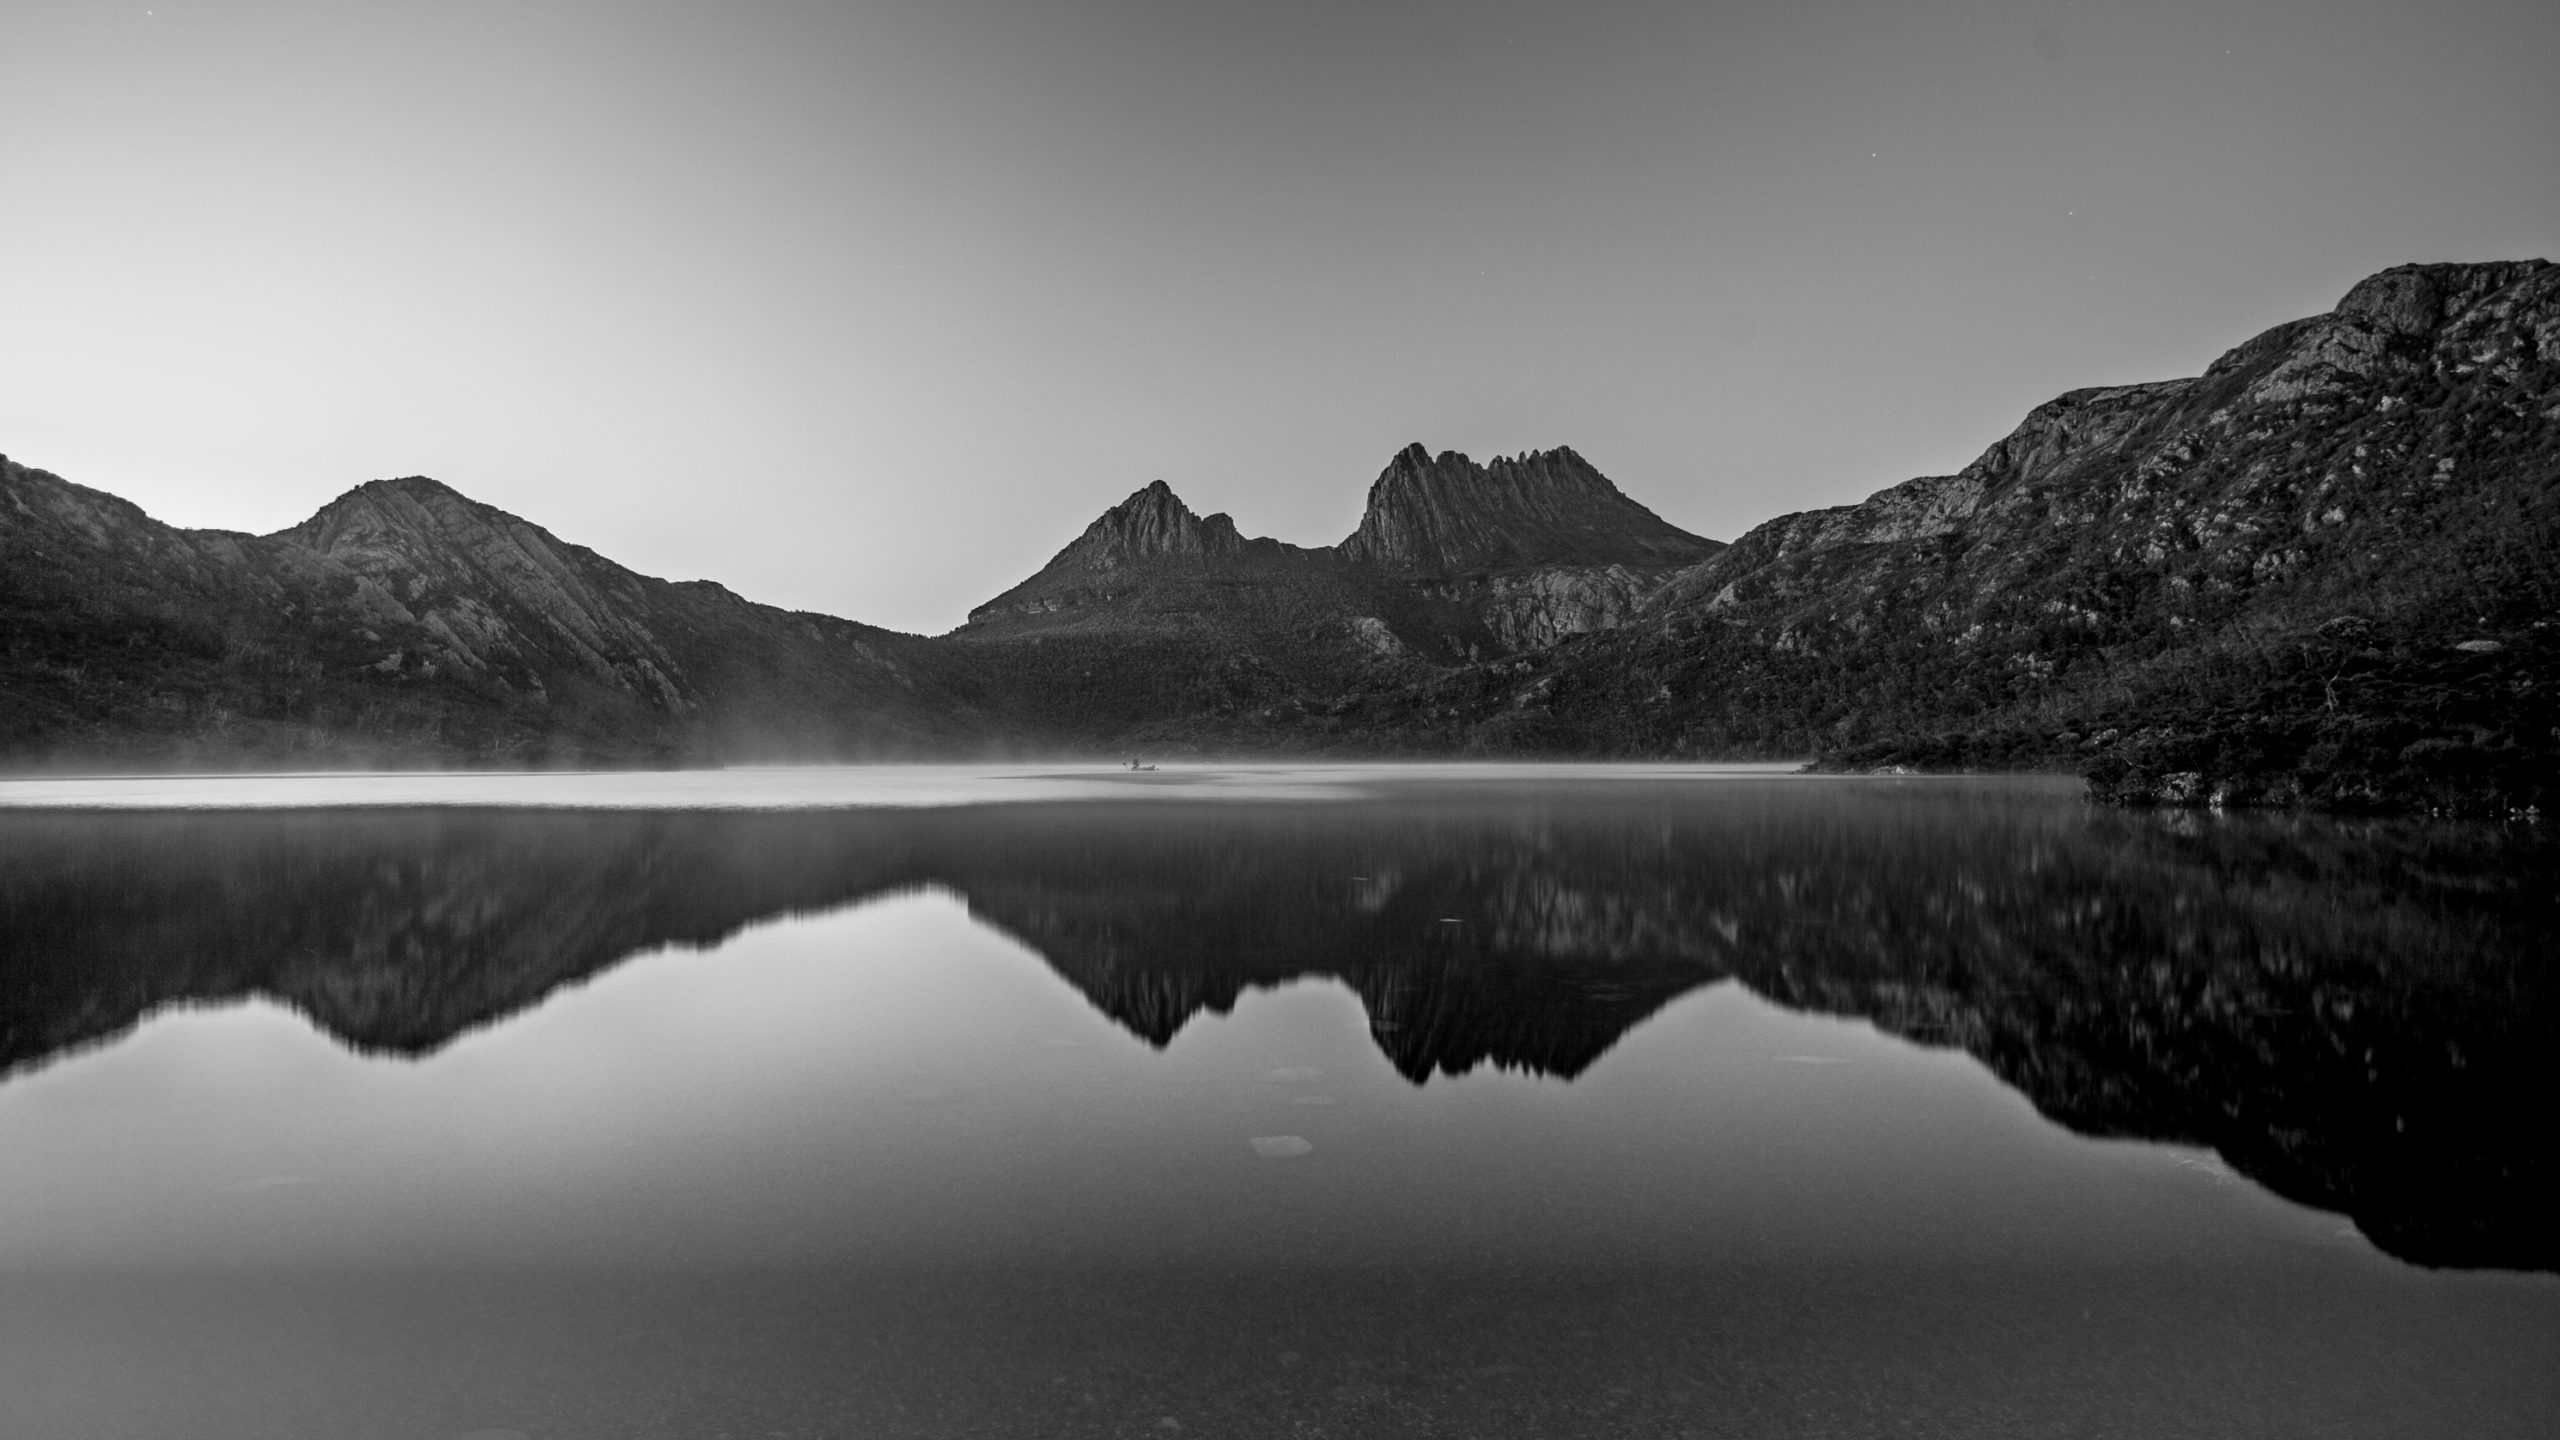 A lake sits at the base of mountains